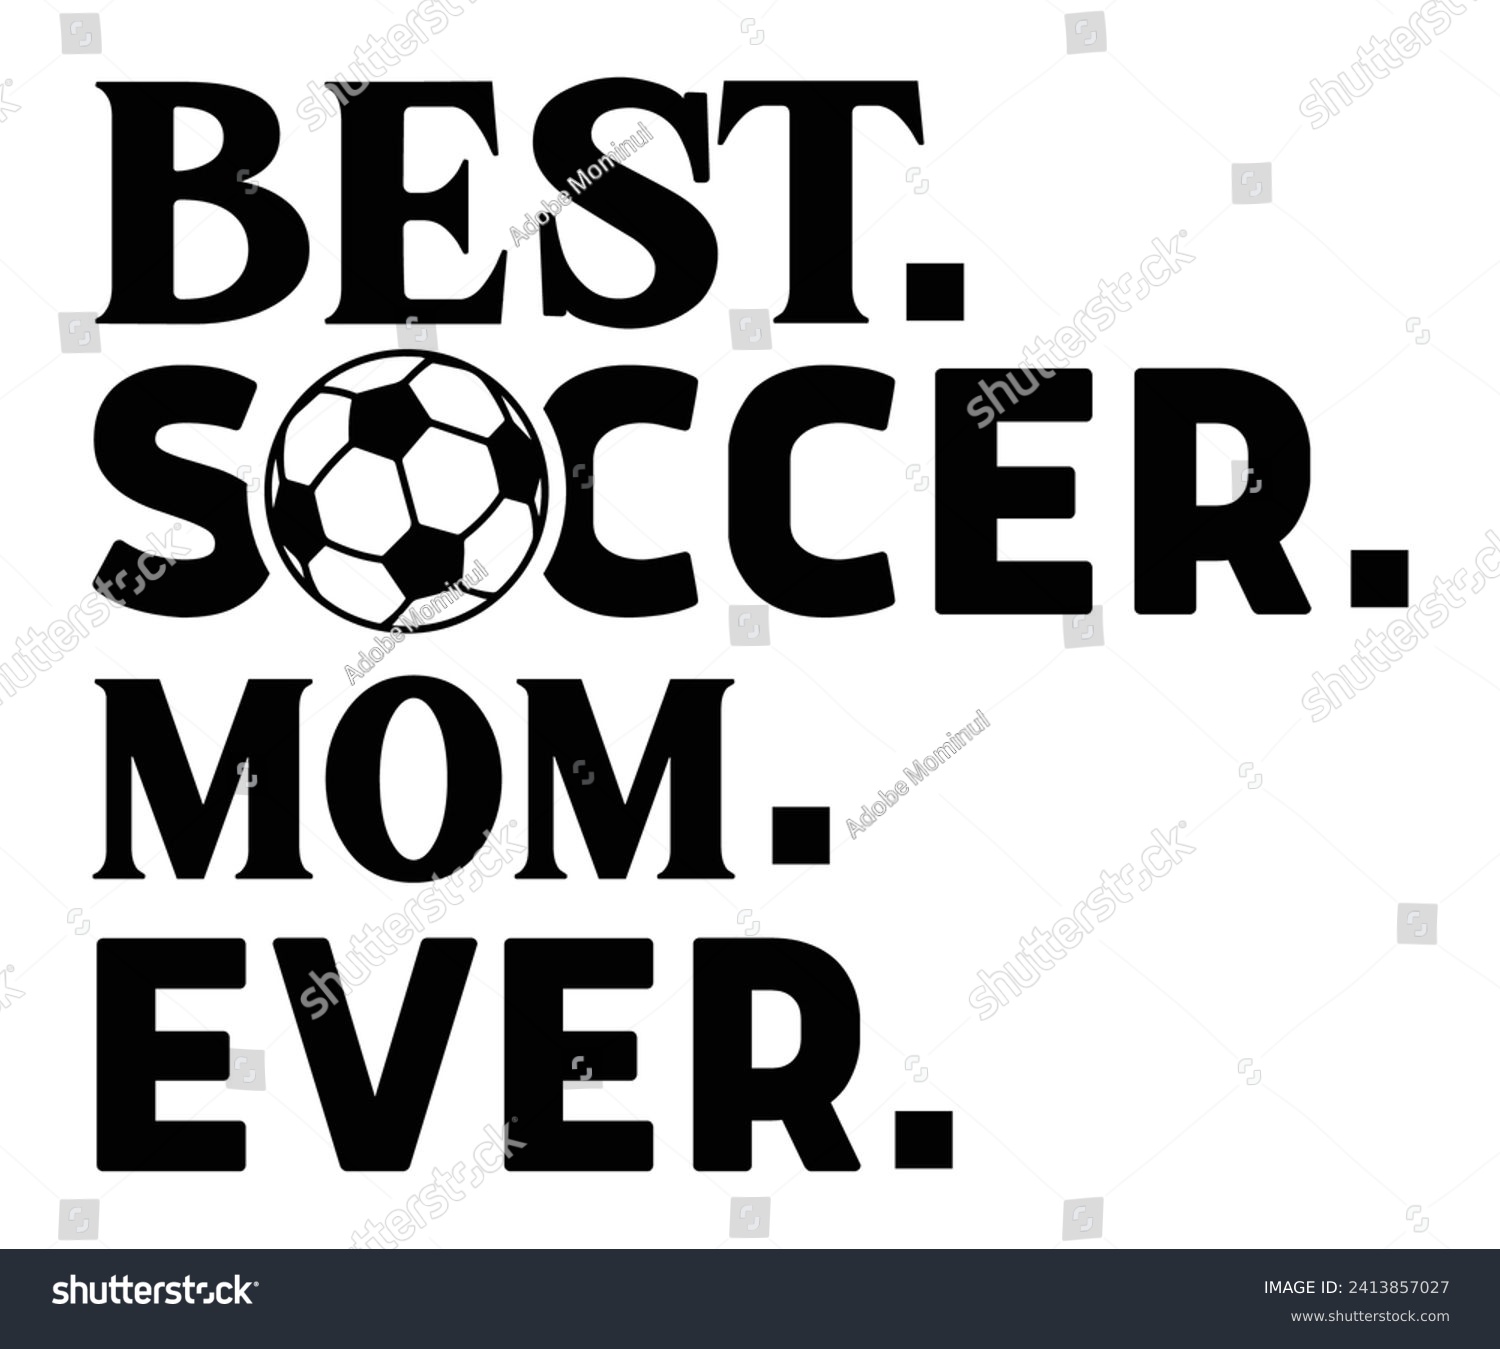 SVG of Best Soccer Mom Ever Svg,Soccer Svg,Soccer Quote Svg,Retro,Soccer Mom Shirt,Funny Shirt,Soccar Player Shirt,Game Day Shirt,Gift For Soccer,Dad of Soccer,Soccer Mascot,Soccer Football,Groovy, svg